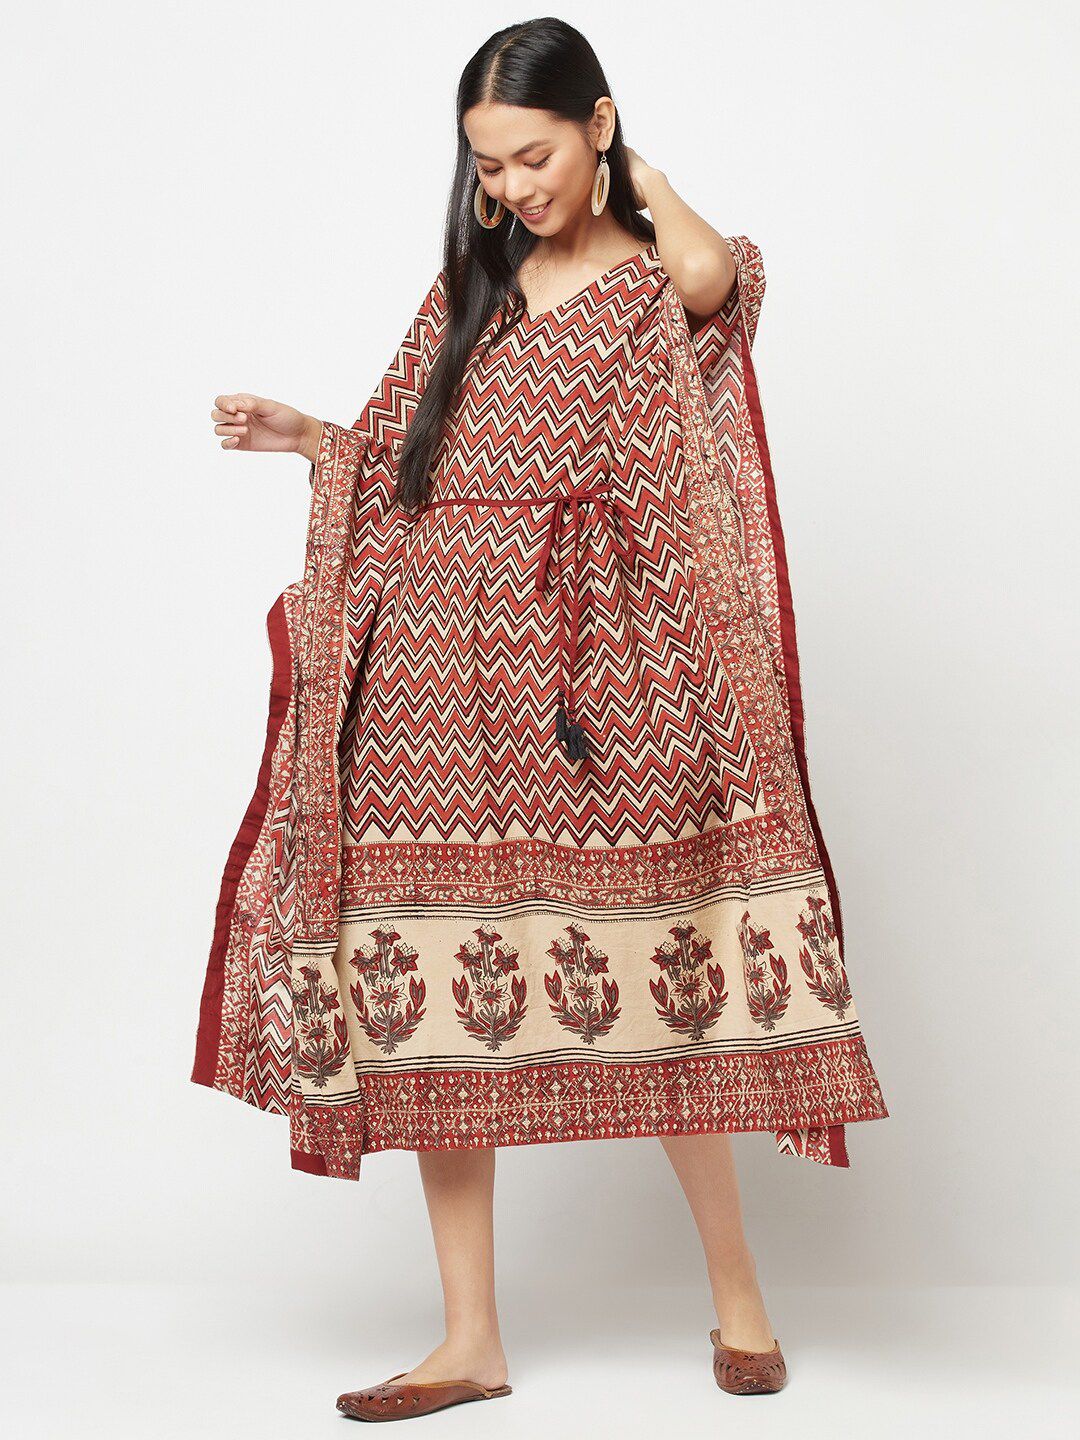 Fabindia Red & Cream-Coloured Ethnic Motifs Block Printed Cotton Kaftan Midi Dress Price in India